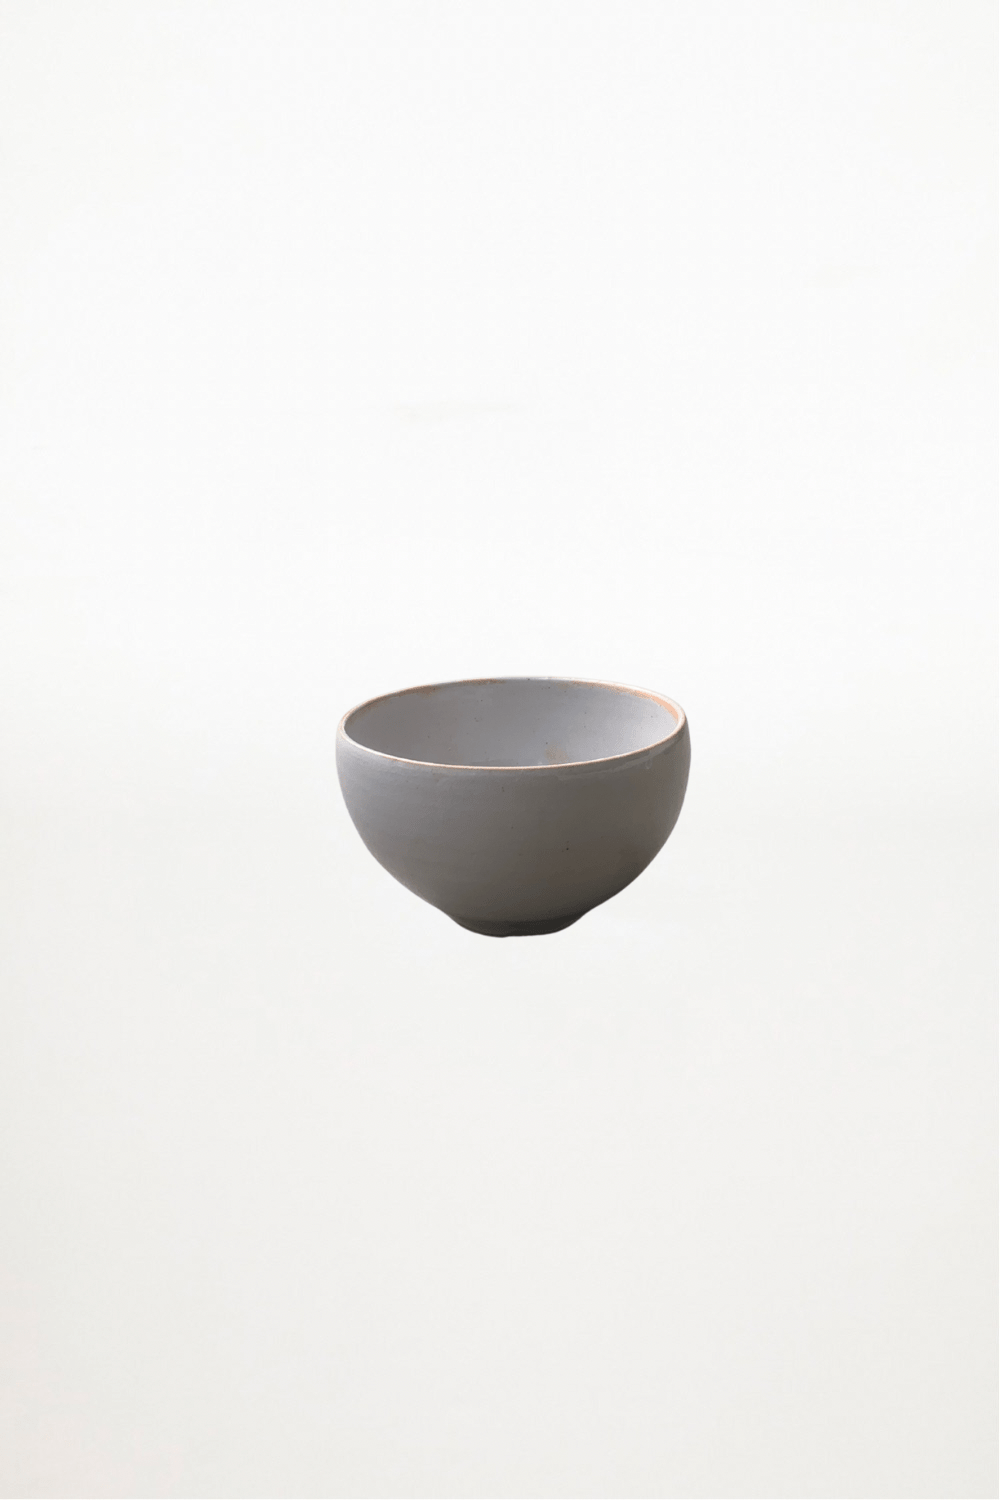 Aburi Ceramics - Bowl - Grey - Ensemble Studios